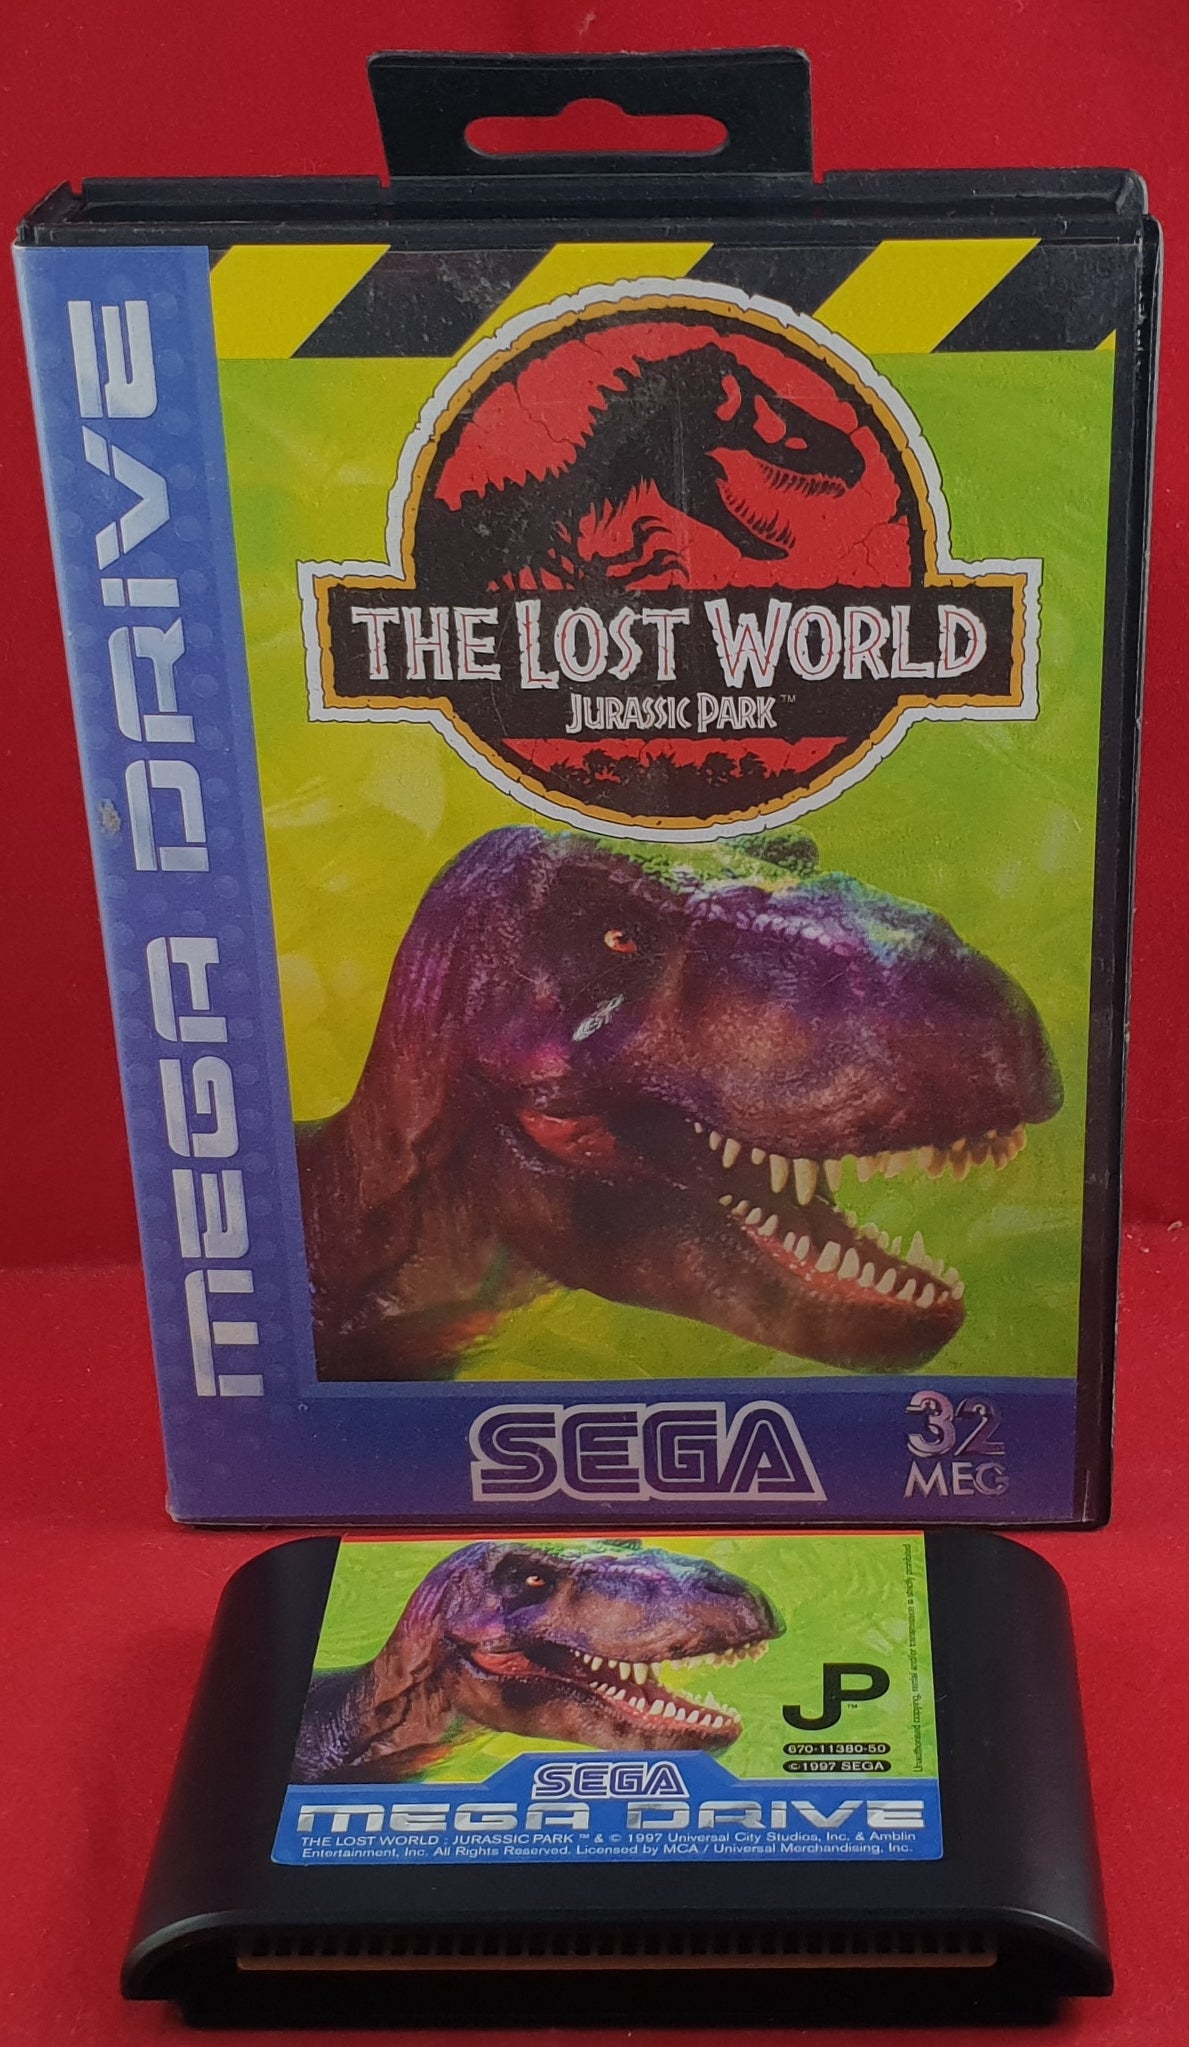 The Lost World Jurassic Park (Sega Mega Drive) game